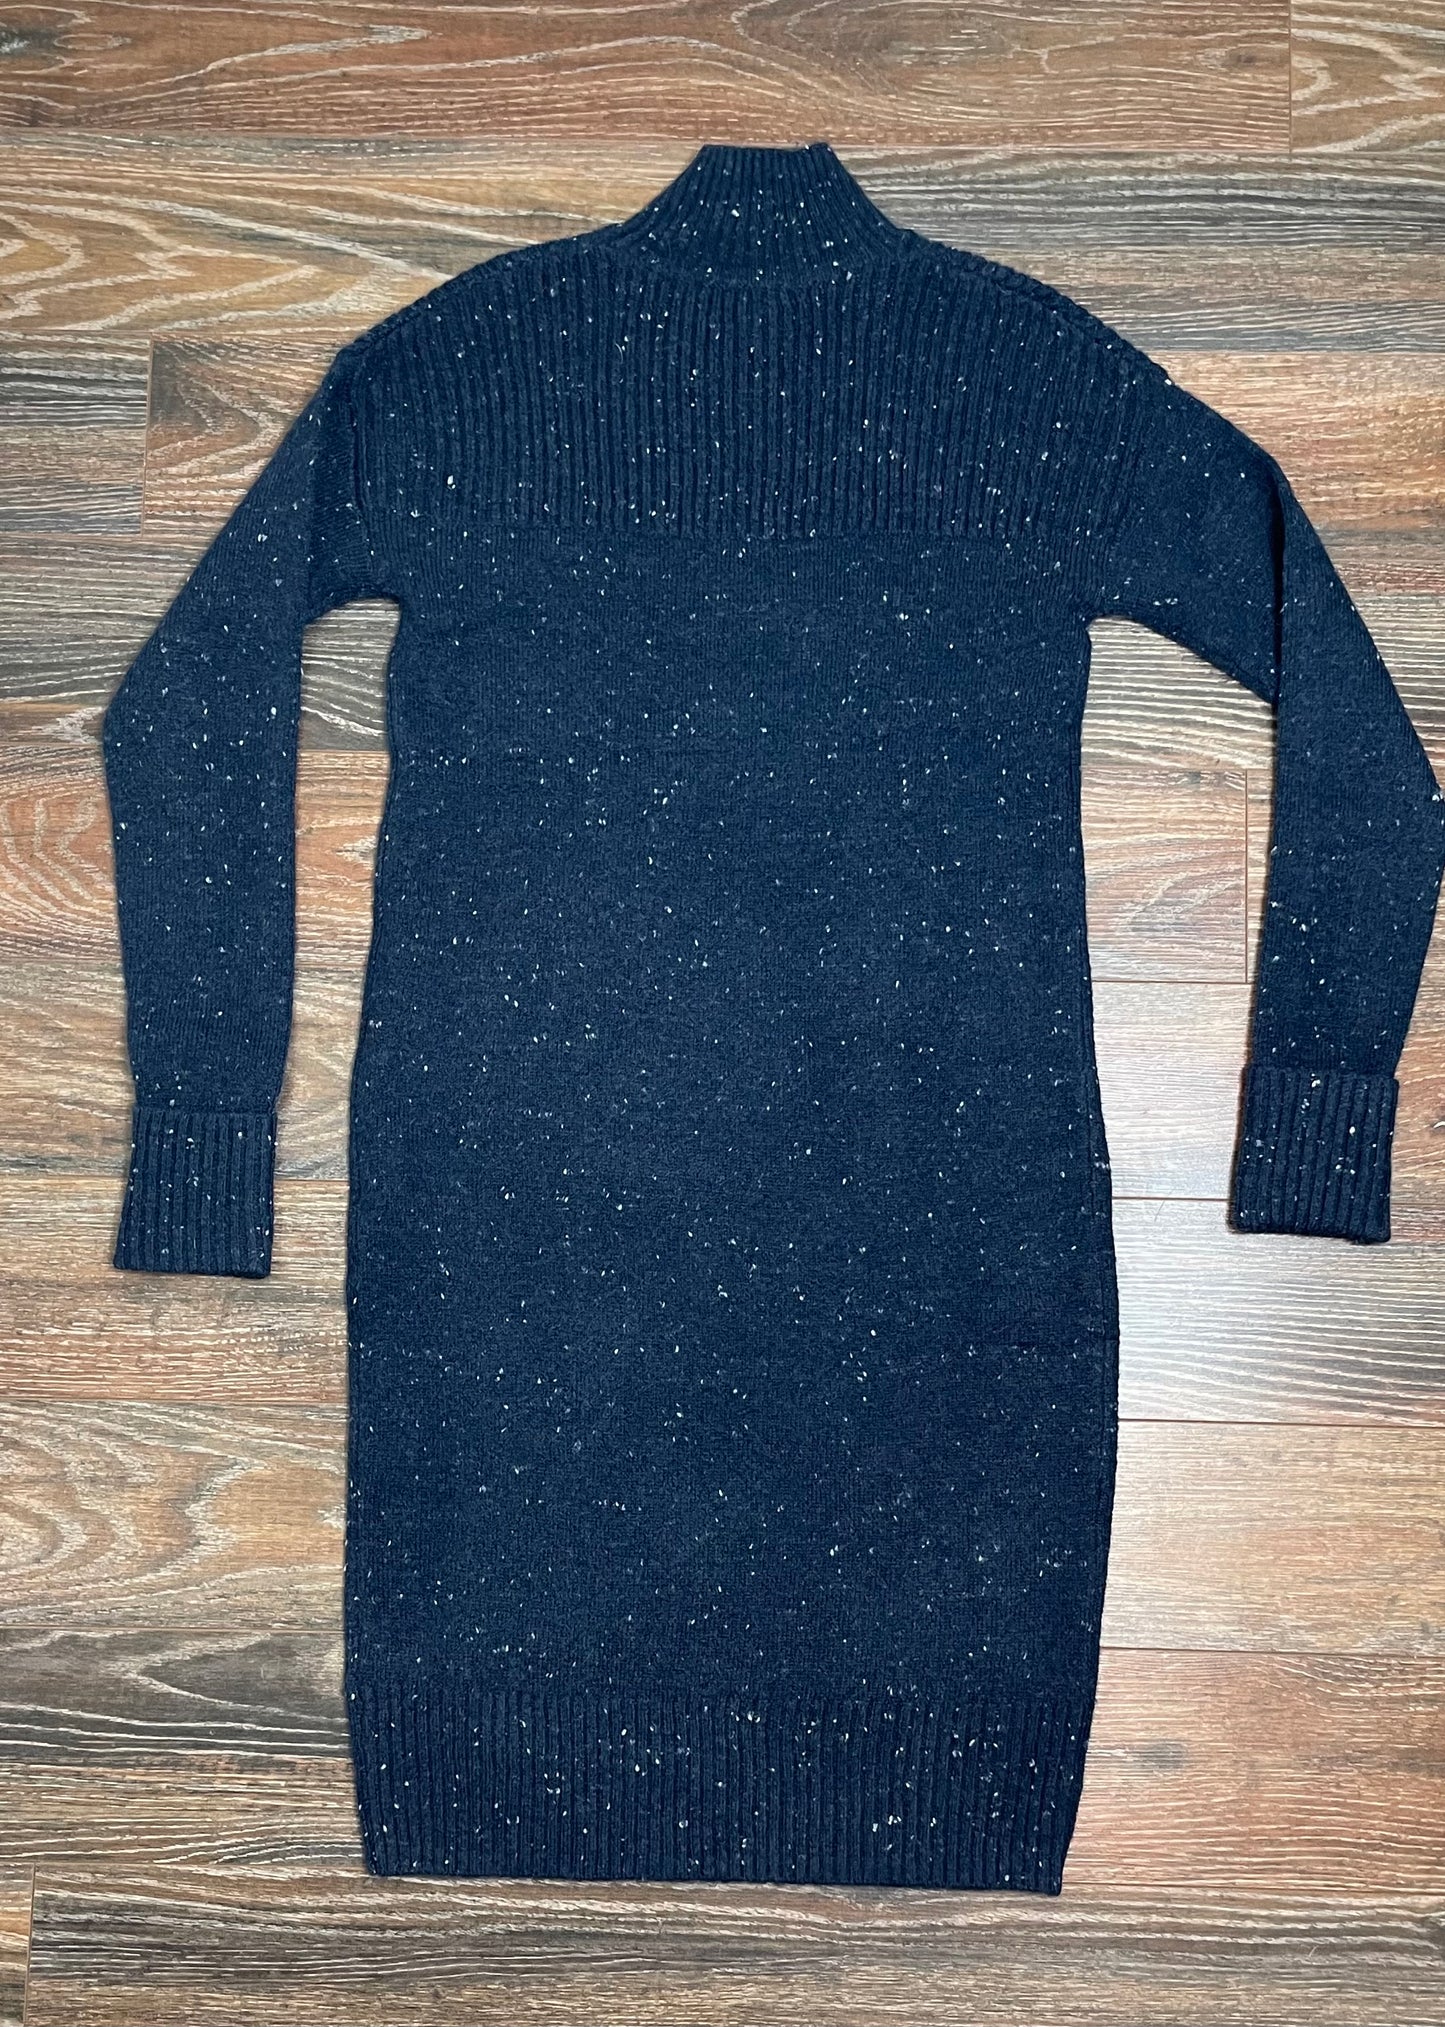 RW & Co Sweater Dress